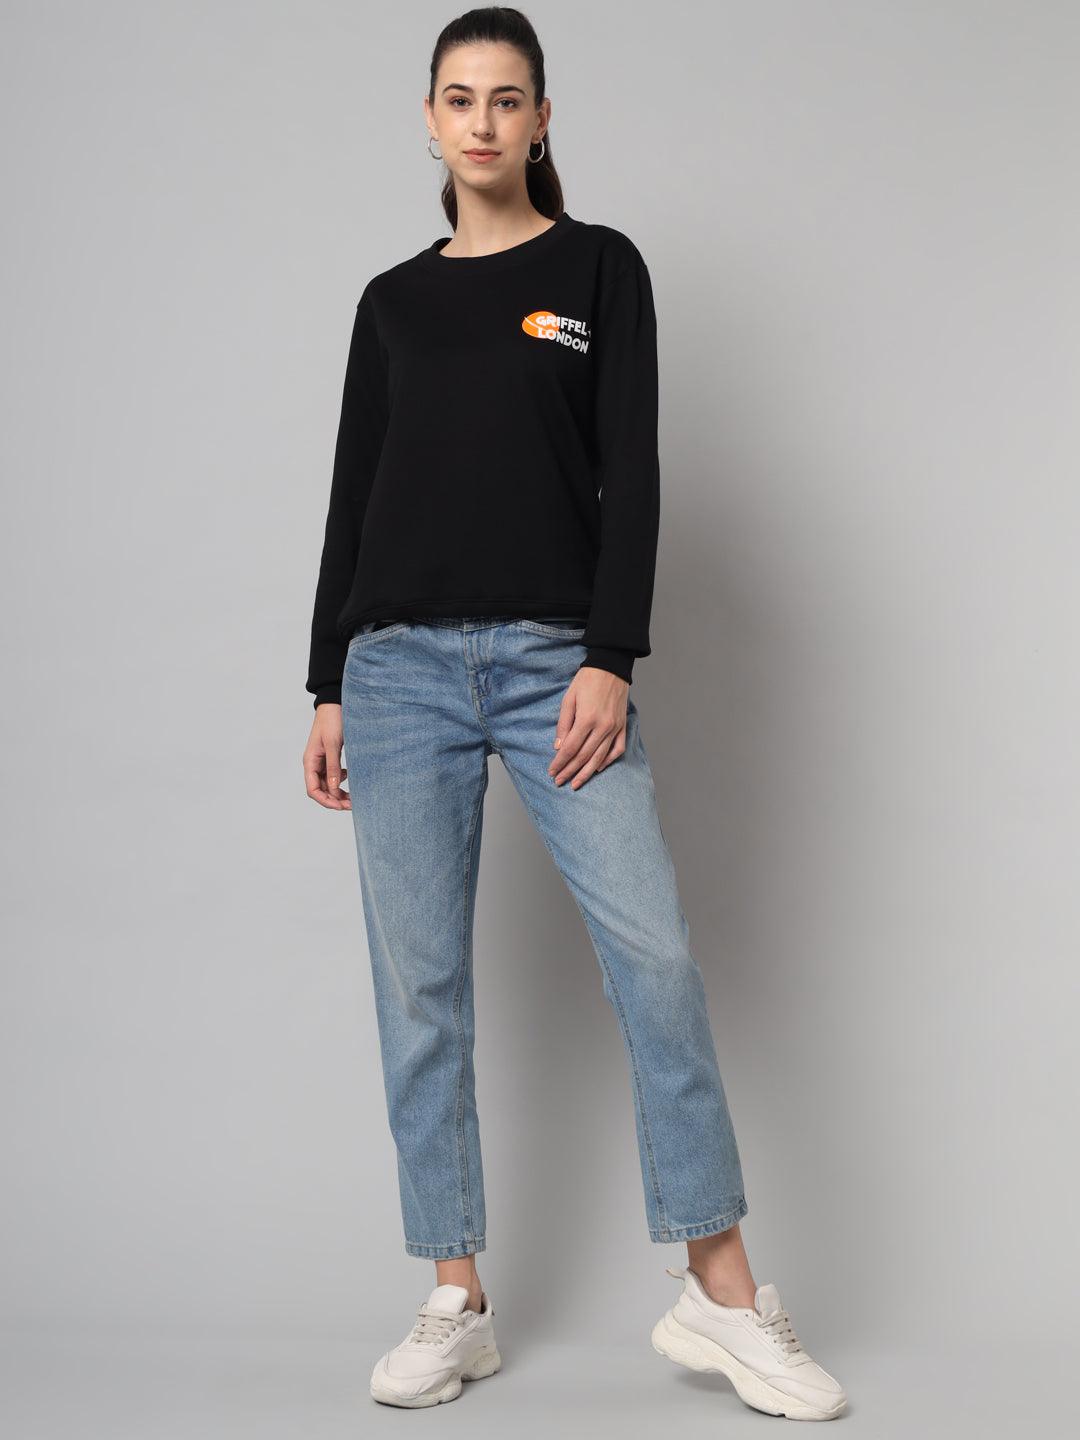 Griffel Women’s Printed Round Neck Black Cotton Fleece Full Sleeve Sweatshirt - griffel